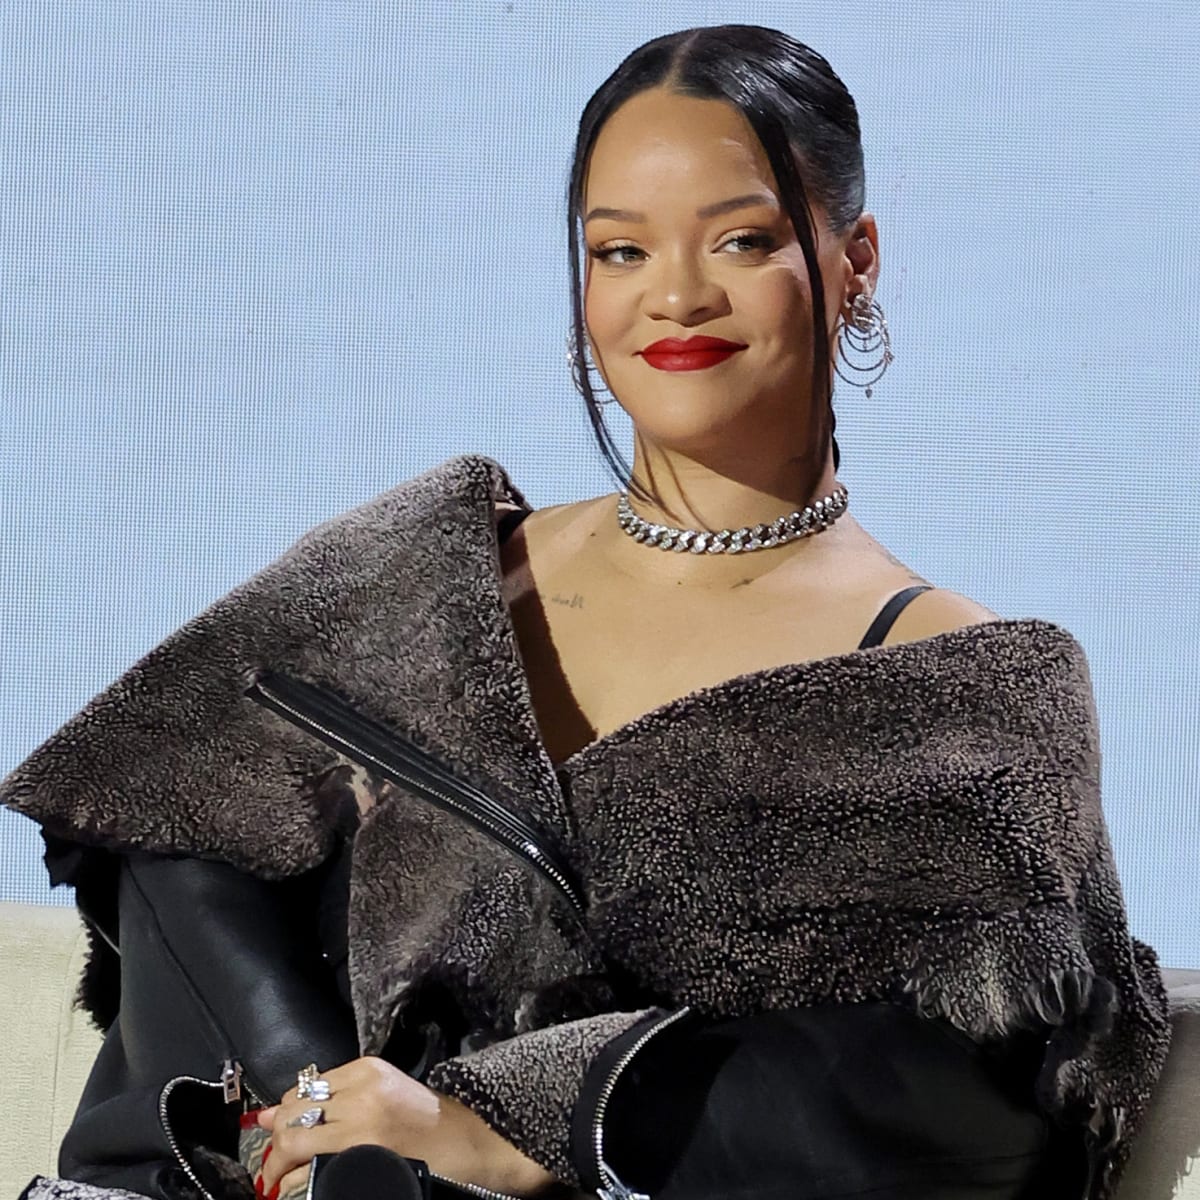 Rihanna Has Stepped Down As Savage X Fenty CEO